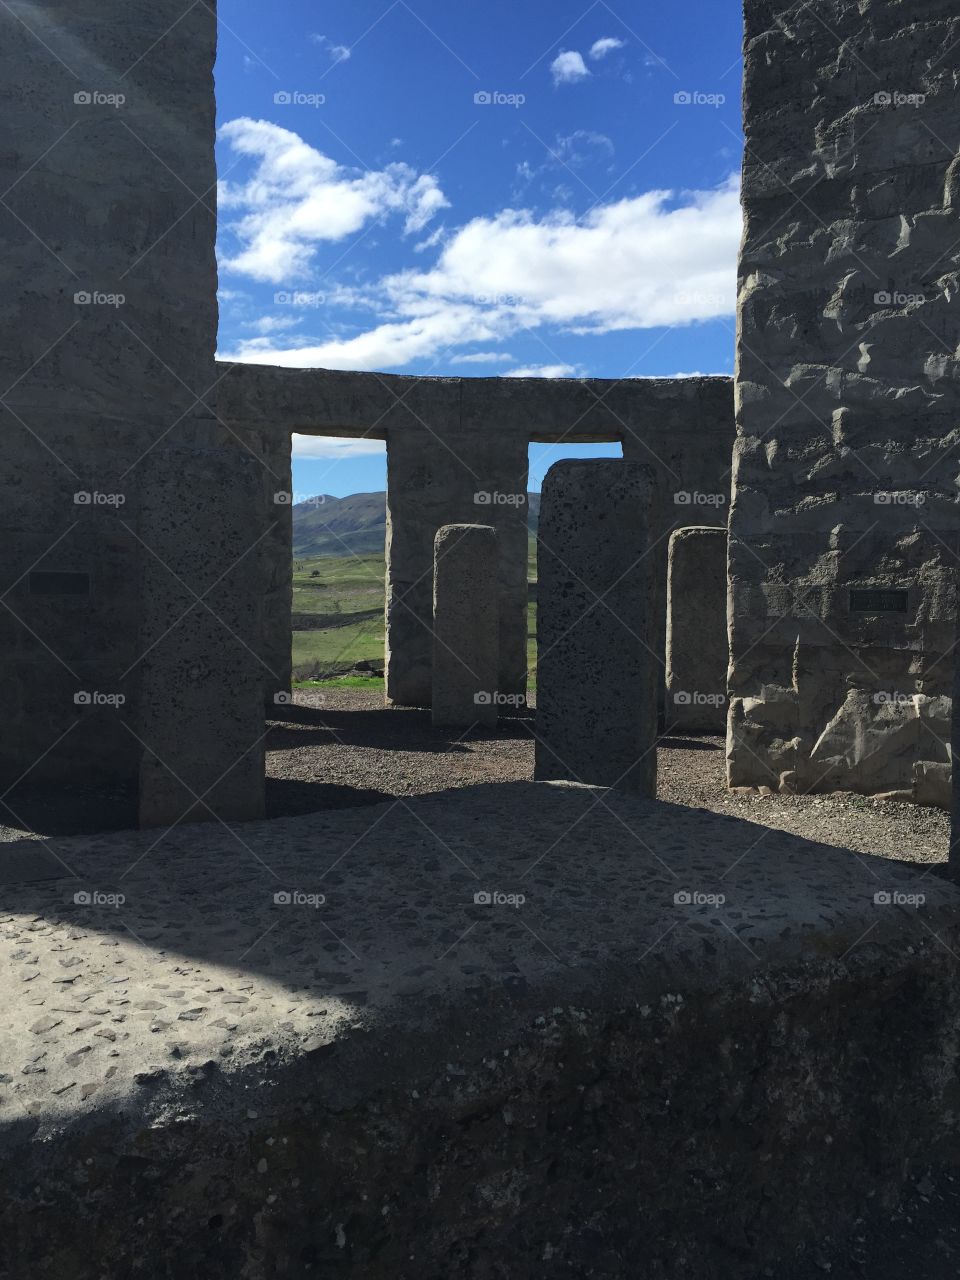 Stonehenge replica in Washington state